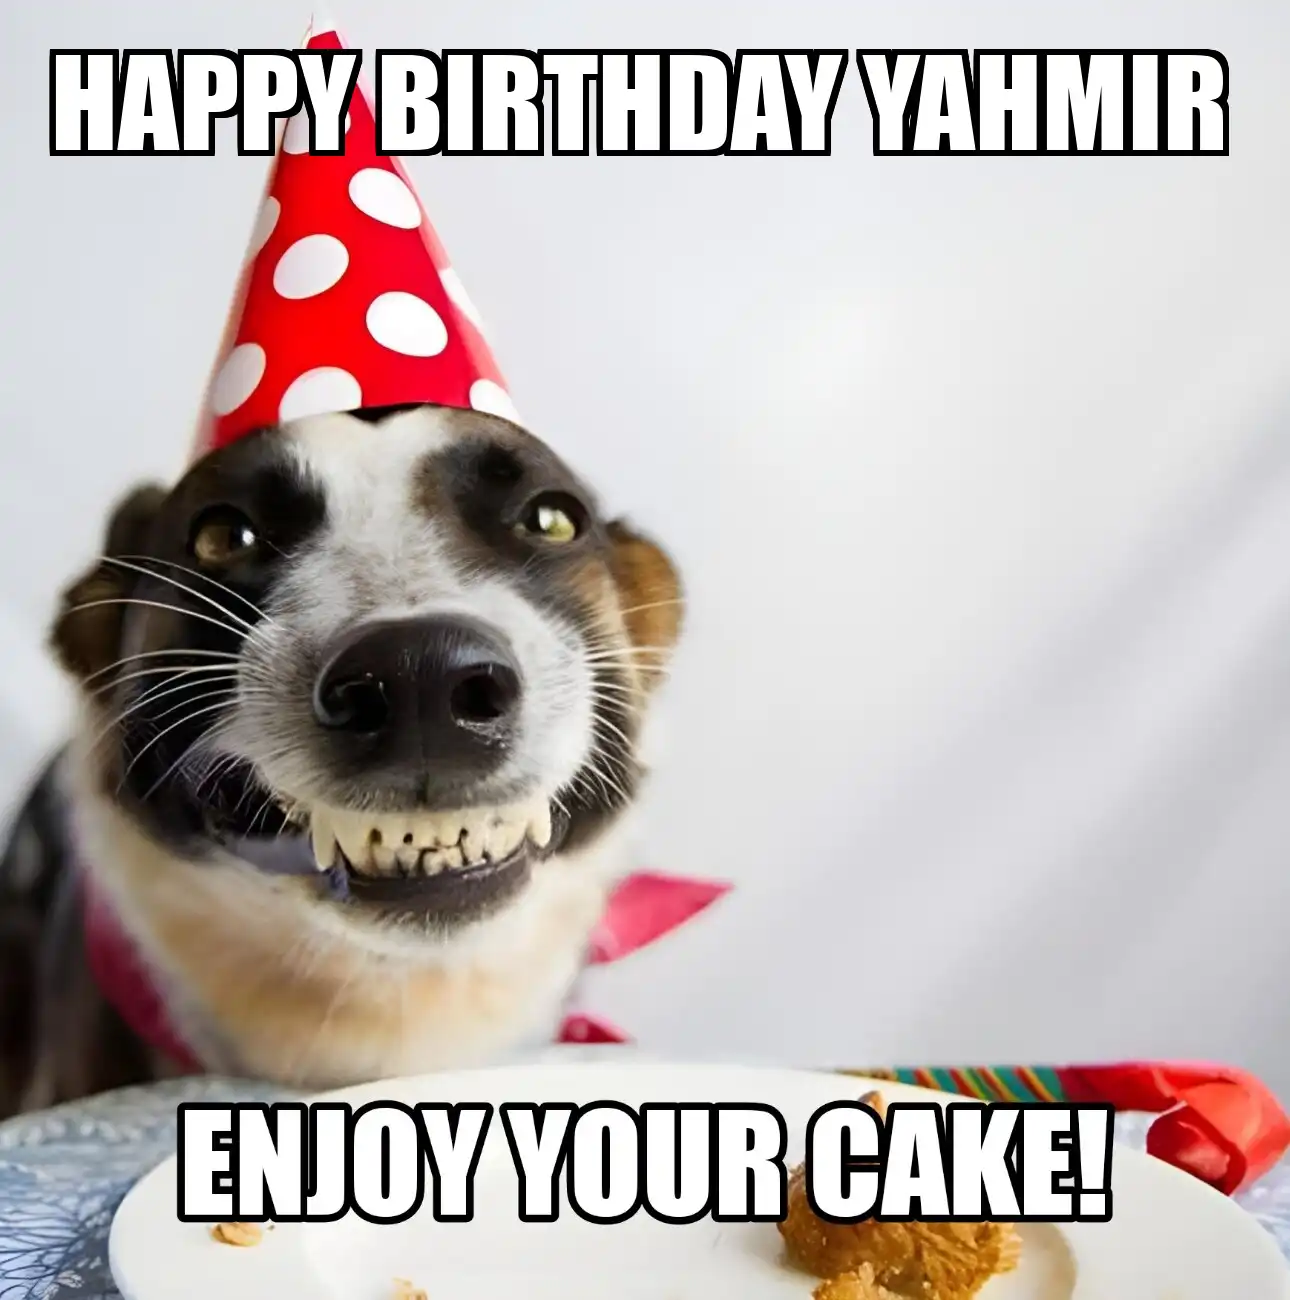 Happy Birthday Yahmir Enjoy Your Cake Dog Meme